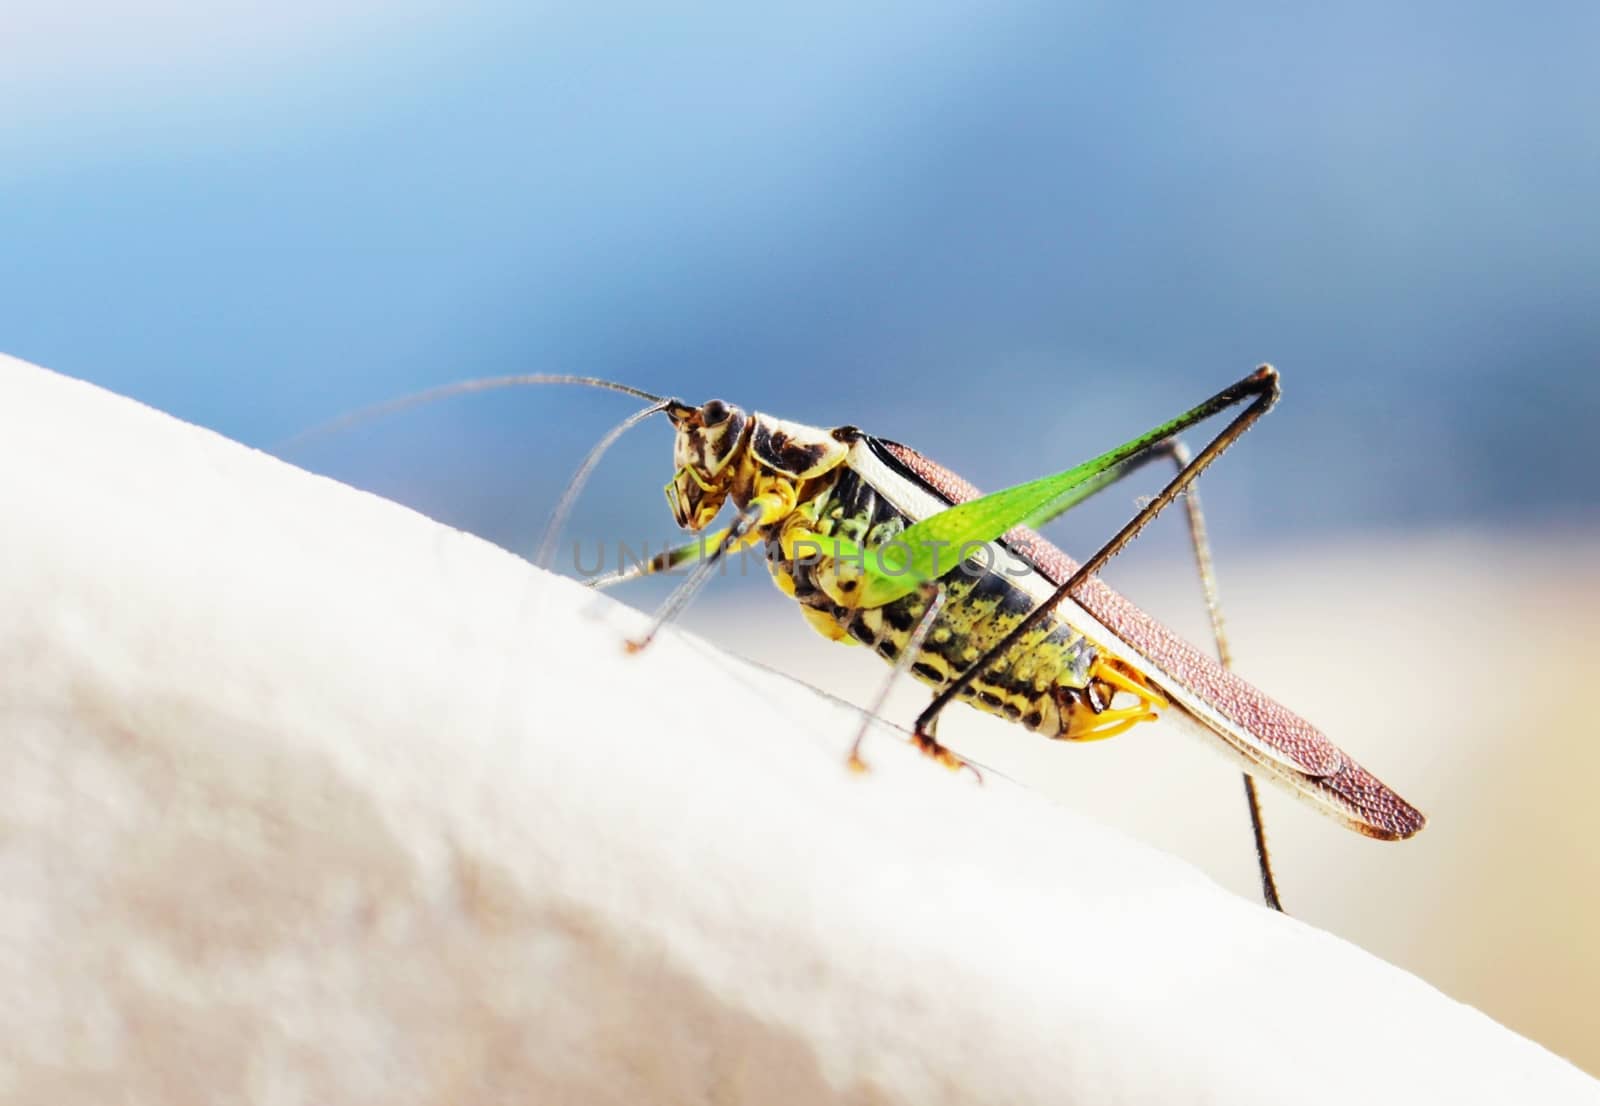 Grasshopper by RichieThakur